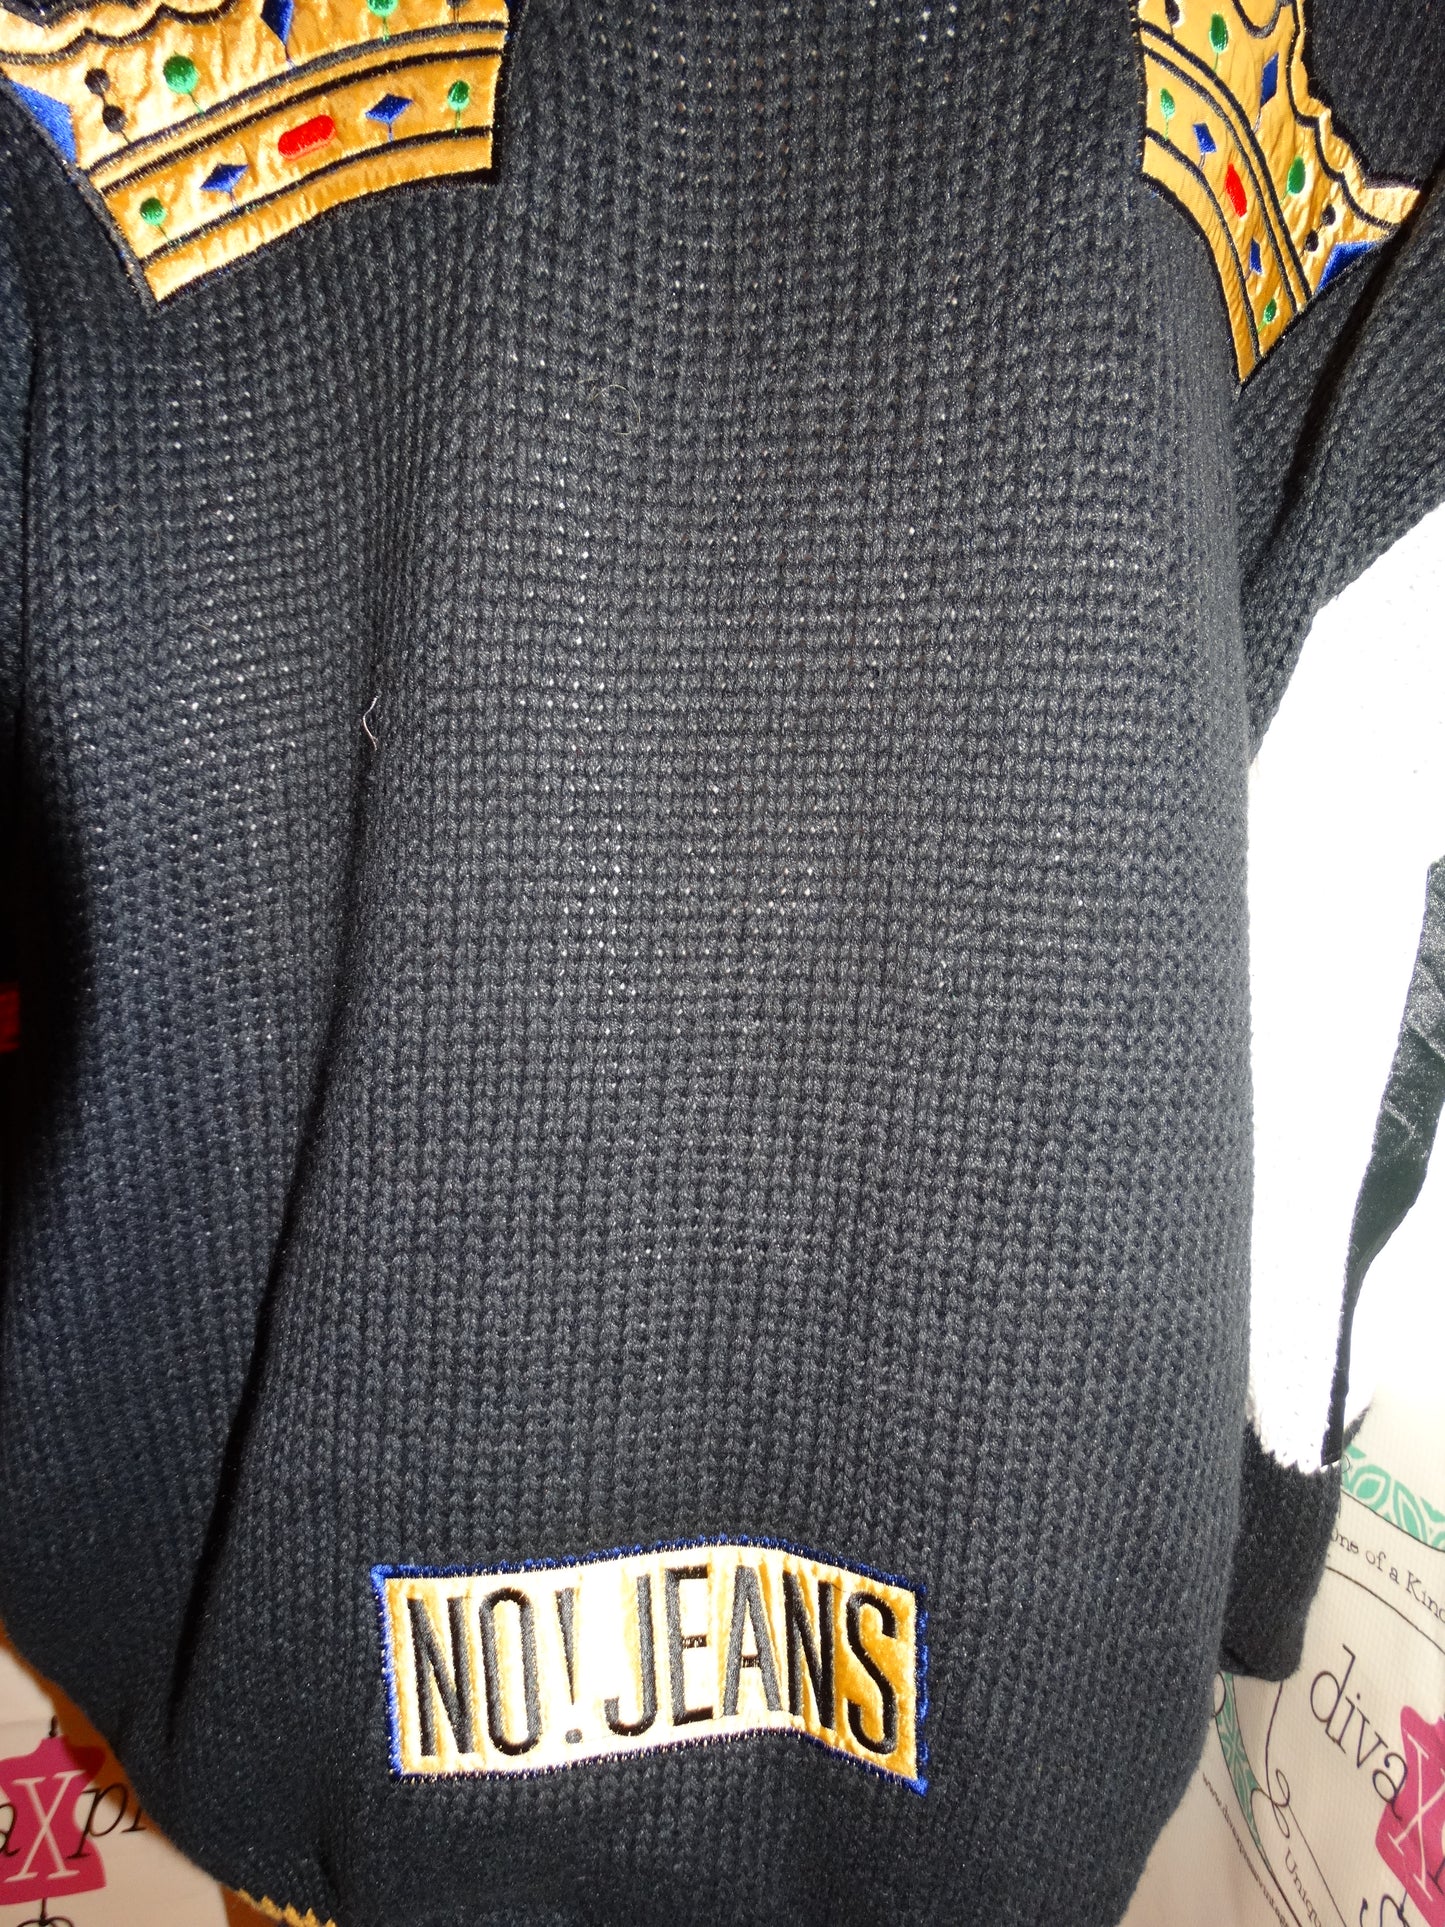 Vintage No Jeans Black Colorful Sweater Size 2x